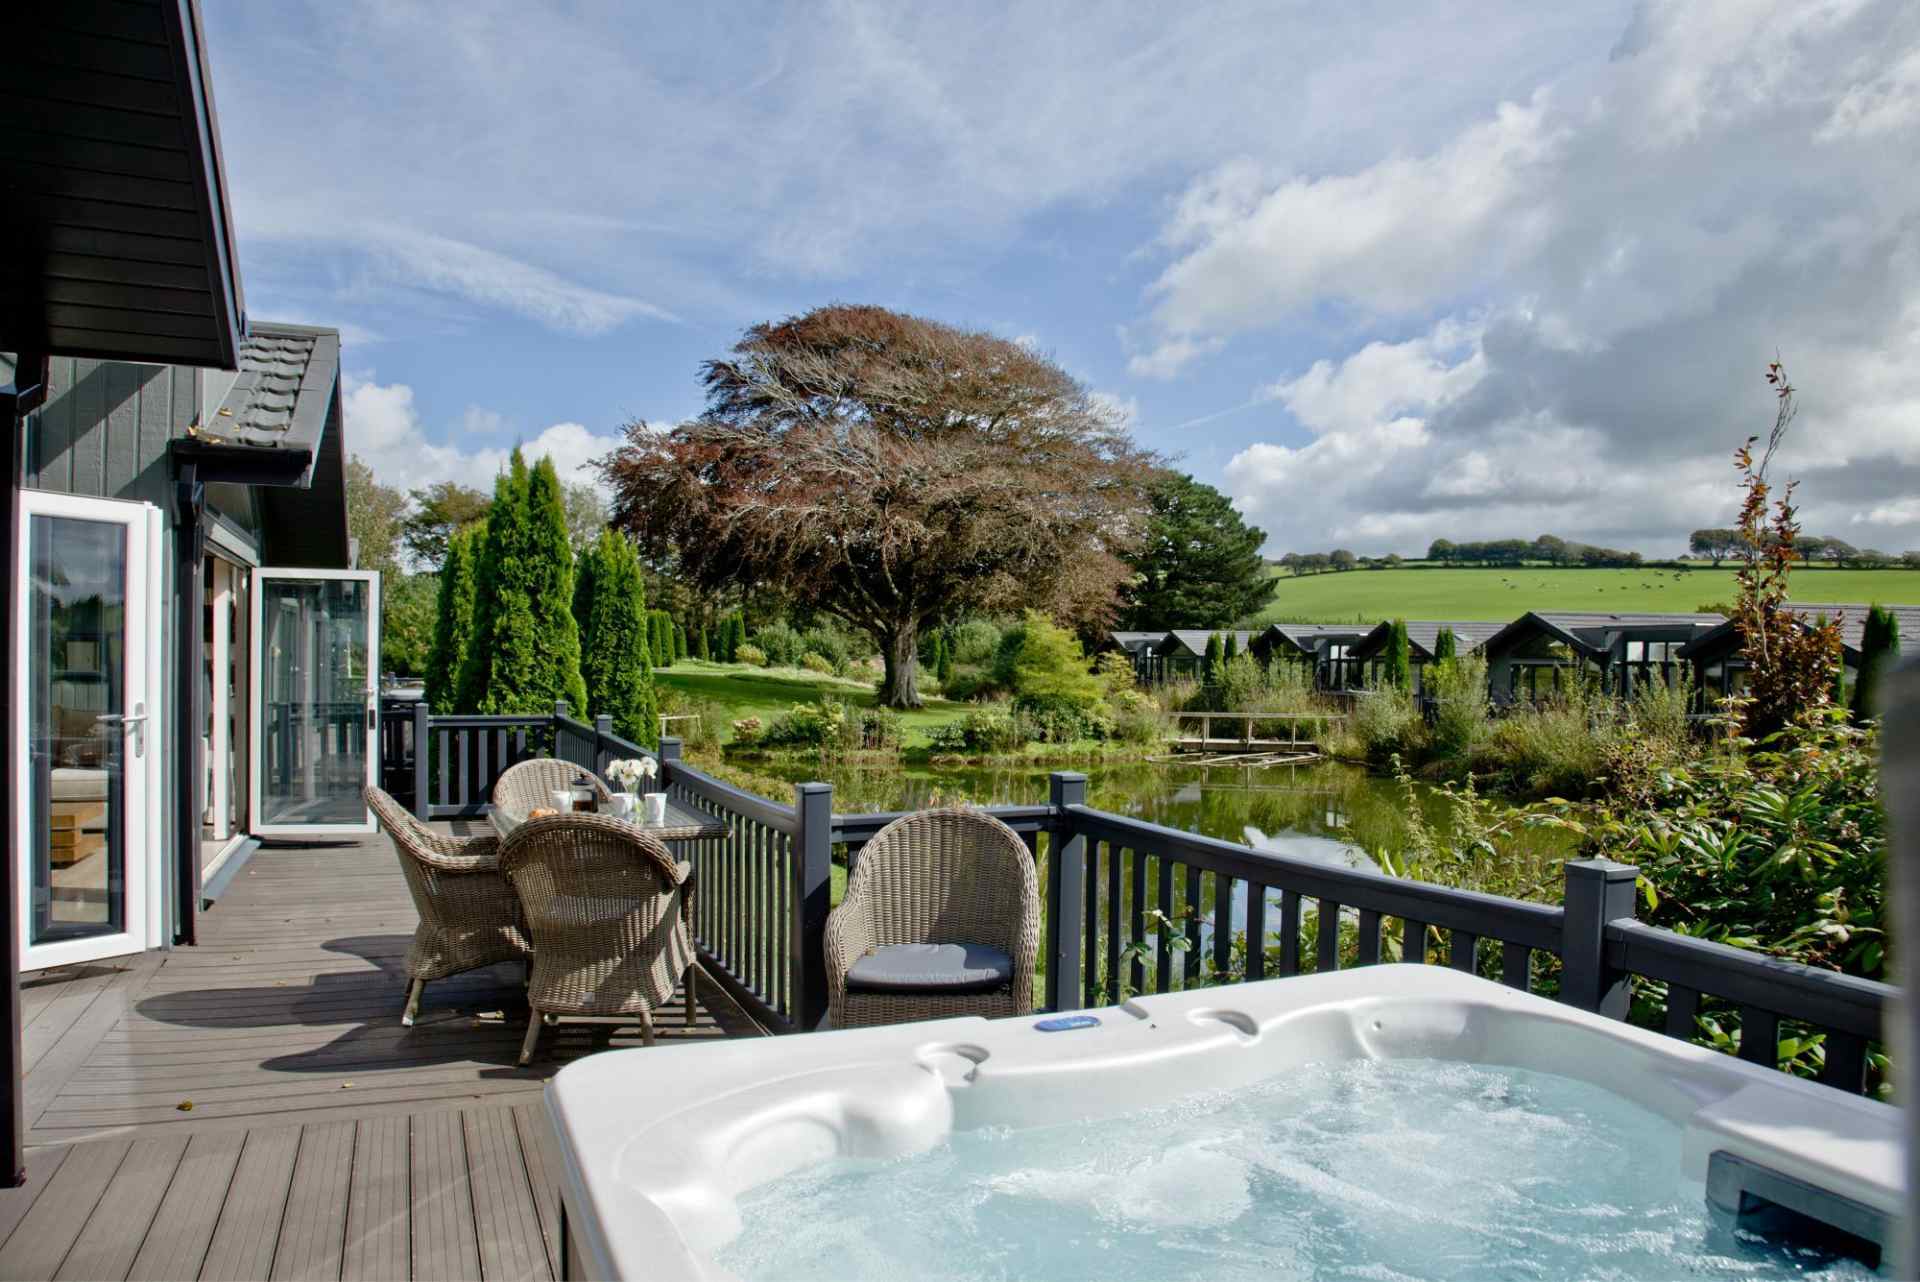 hot-tub-on-decking-of-kentisbury-grange-lodges-overlooking-lake-lodges-with-hot-tubs-devon